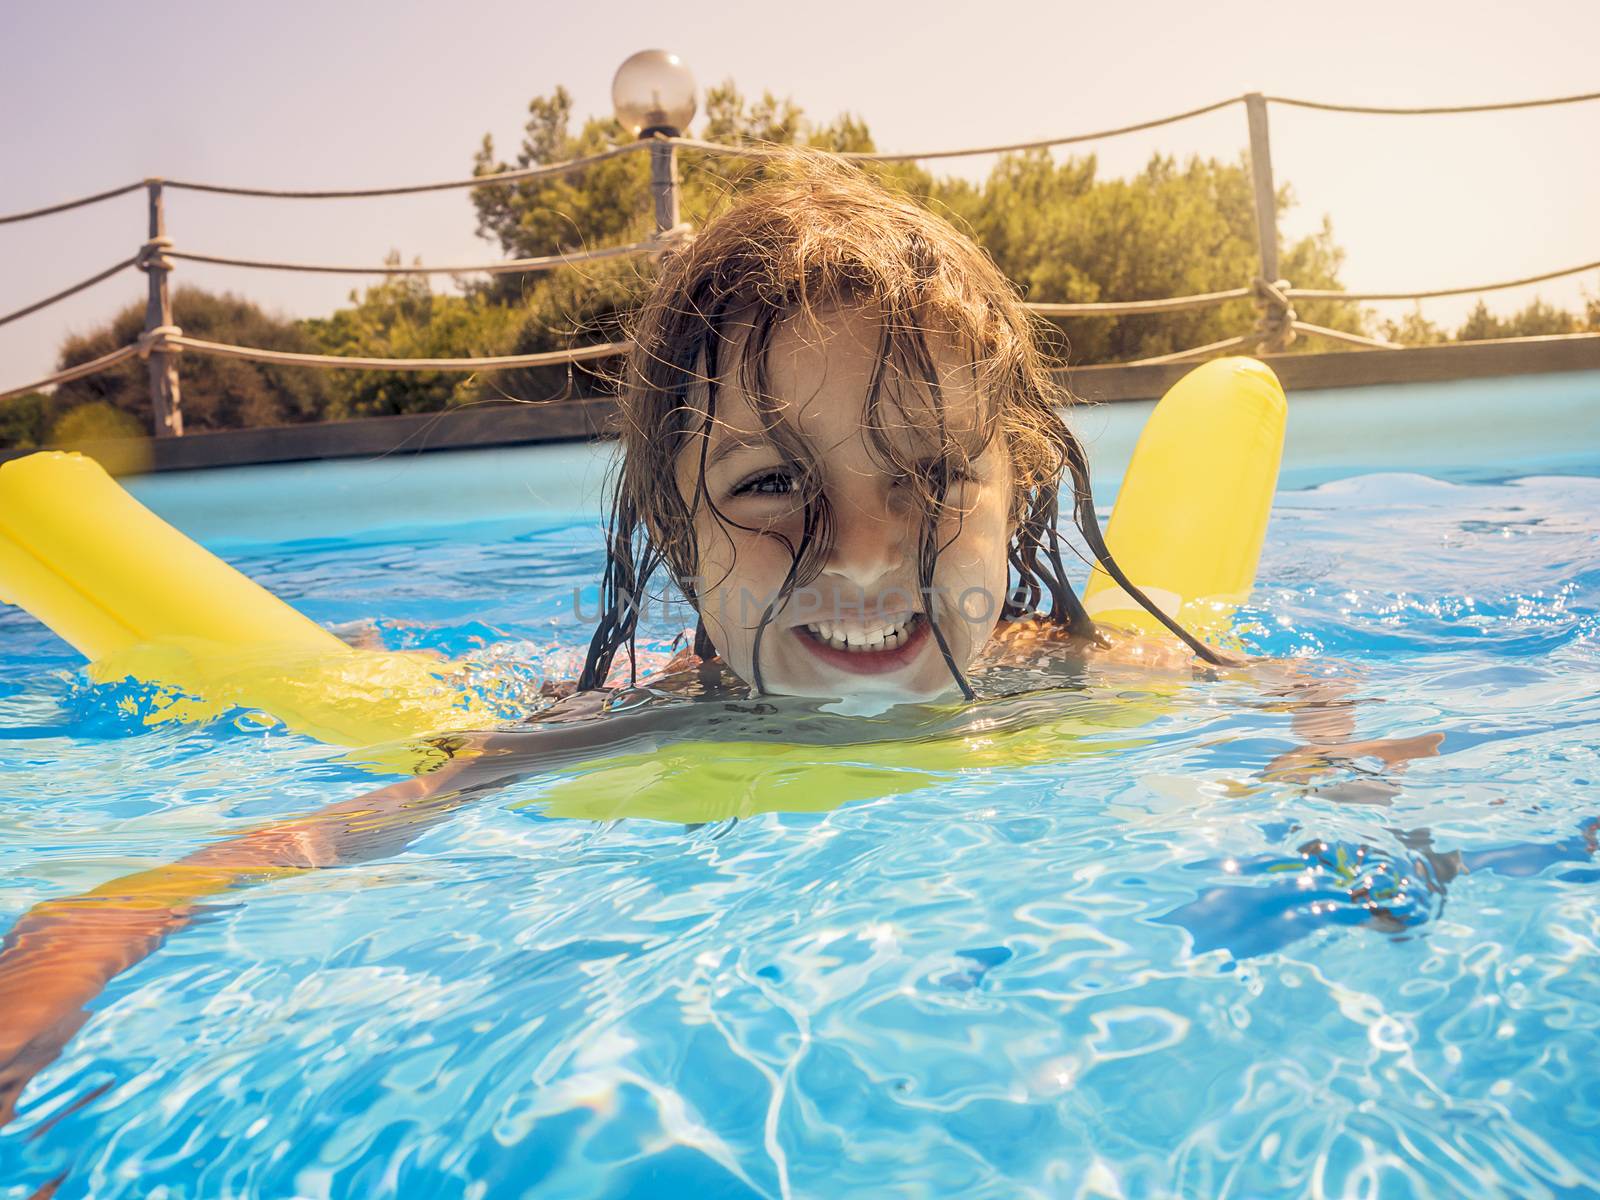 smiling little girl having fun in the pool by raulmelldo